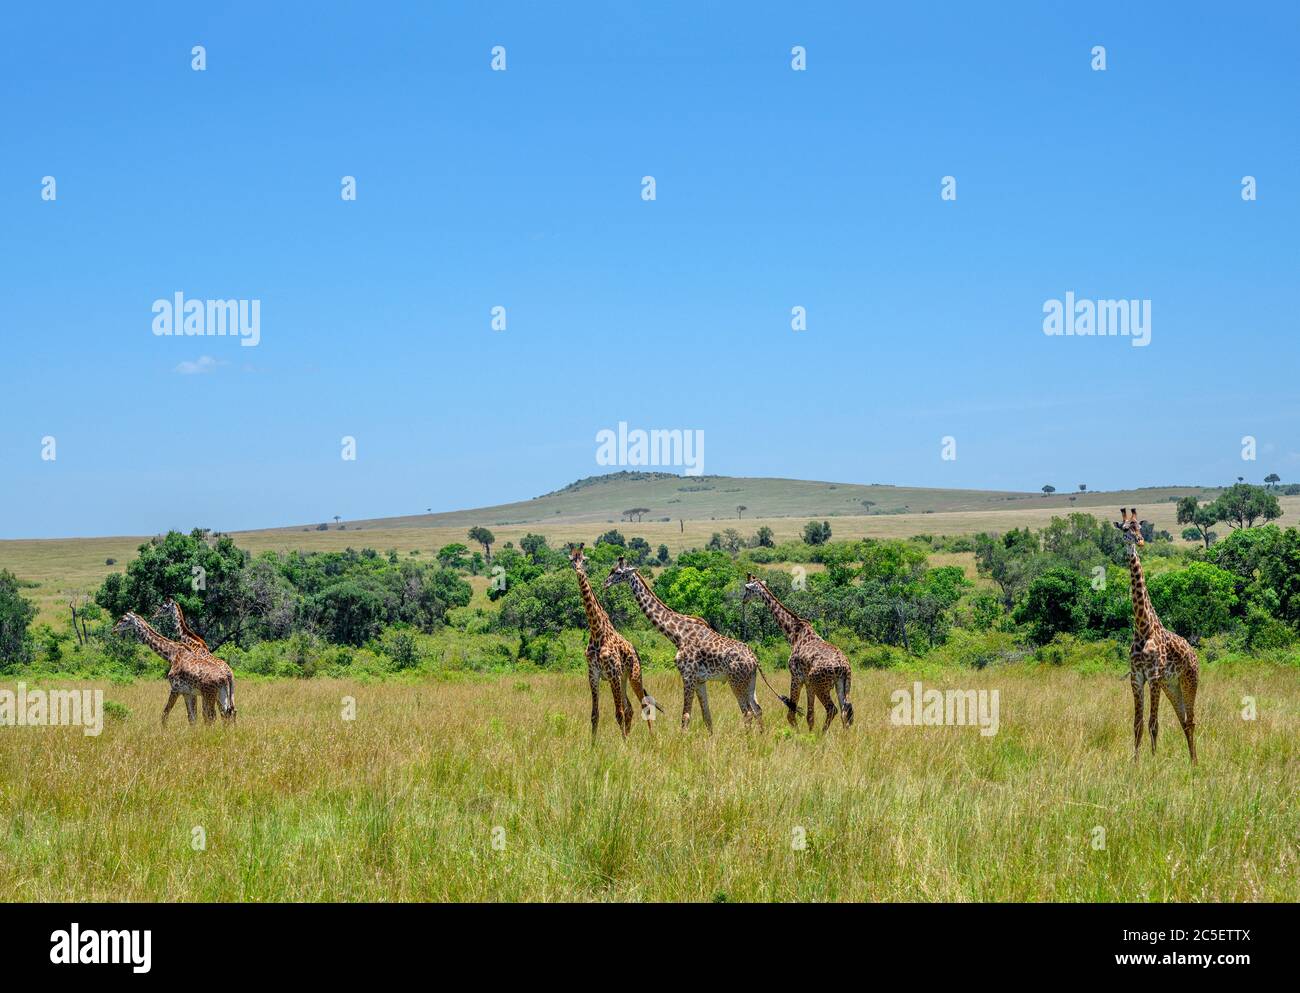 Girafe de Masai (Giraffa camelopardalis tippelskirchii). Groupe de girafes Masai dans la réserve nationale Masai Mara, Kenya, Afrique Banque D'Images